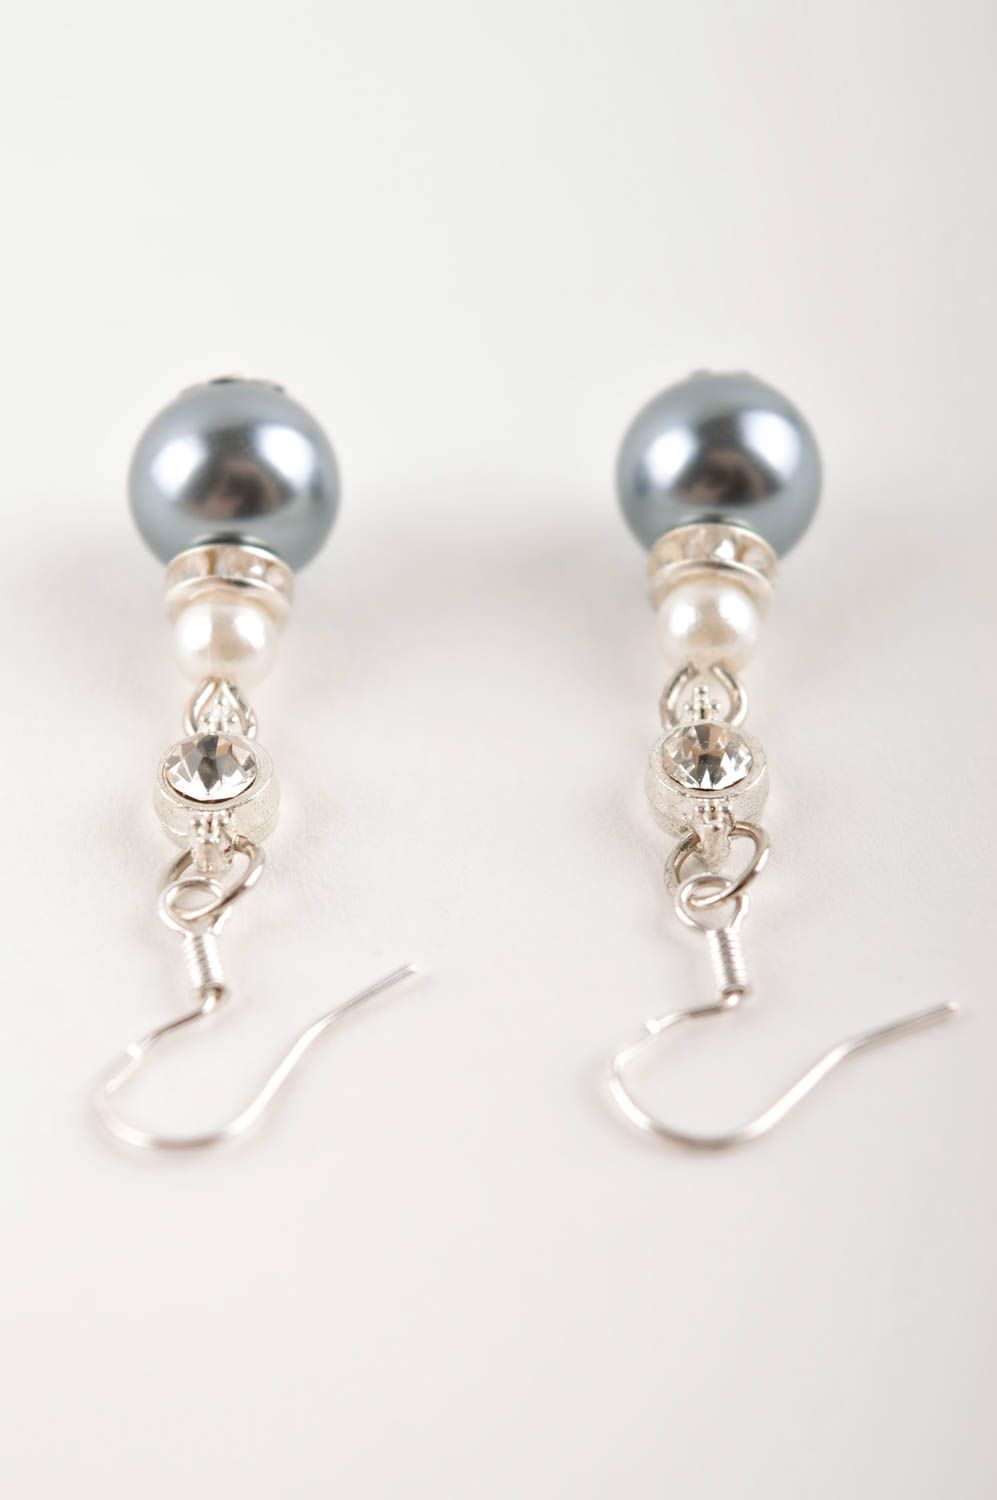 Handmade earrings with charms stylish earrings designer jewelry women accessory photo 5